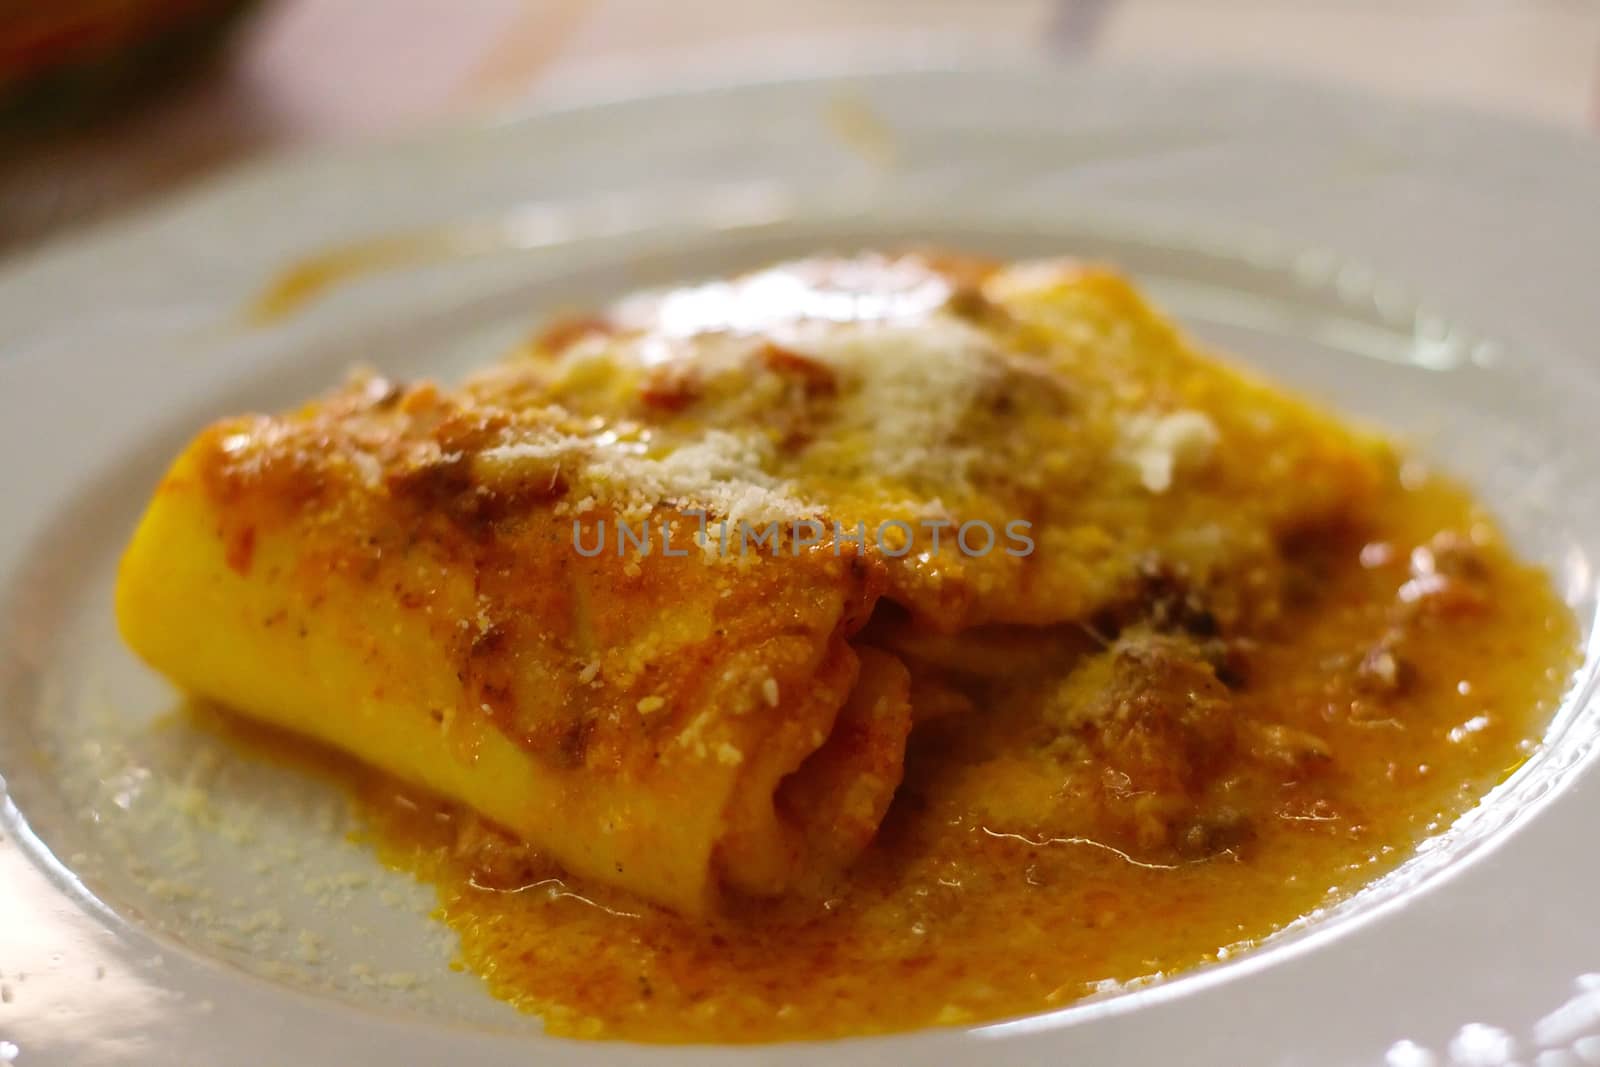 Lasagna in Restaurant by totony